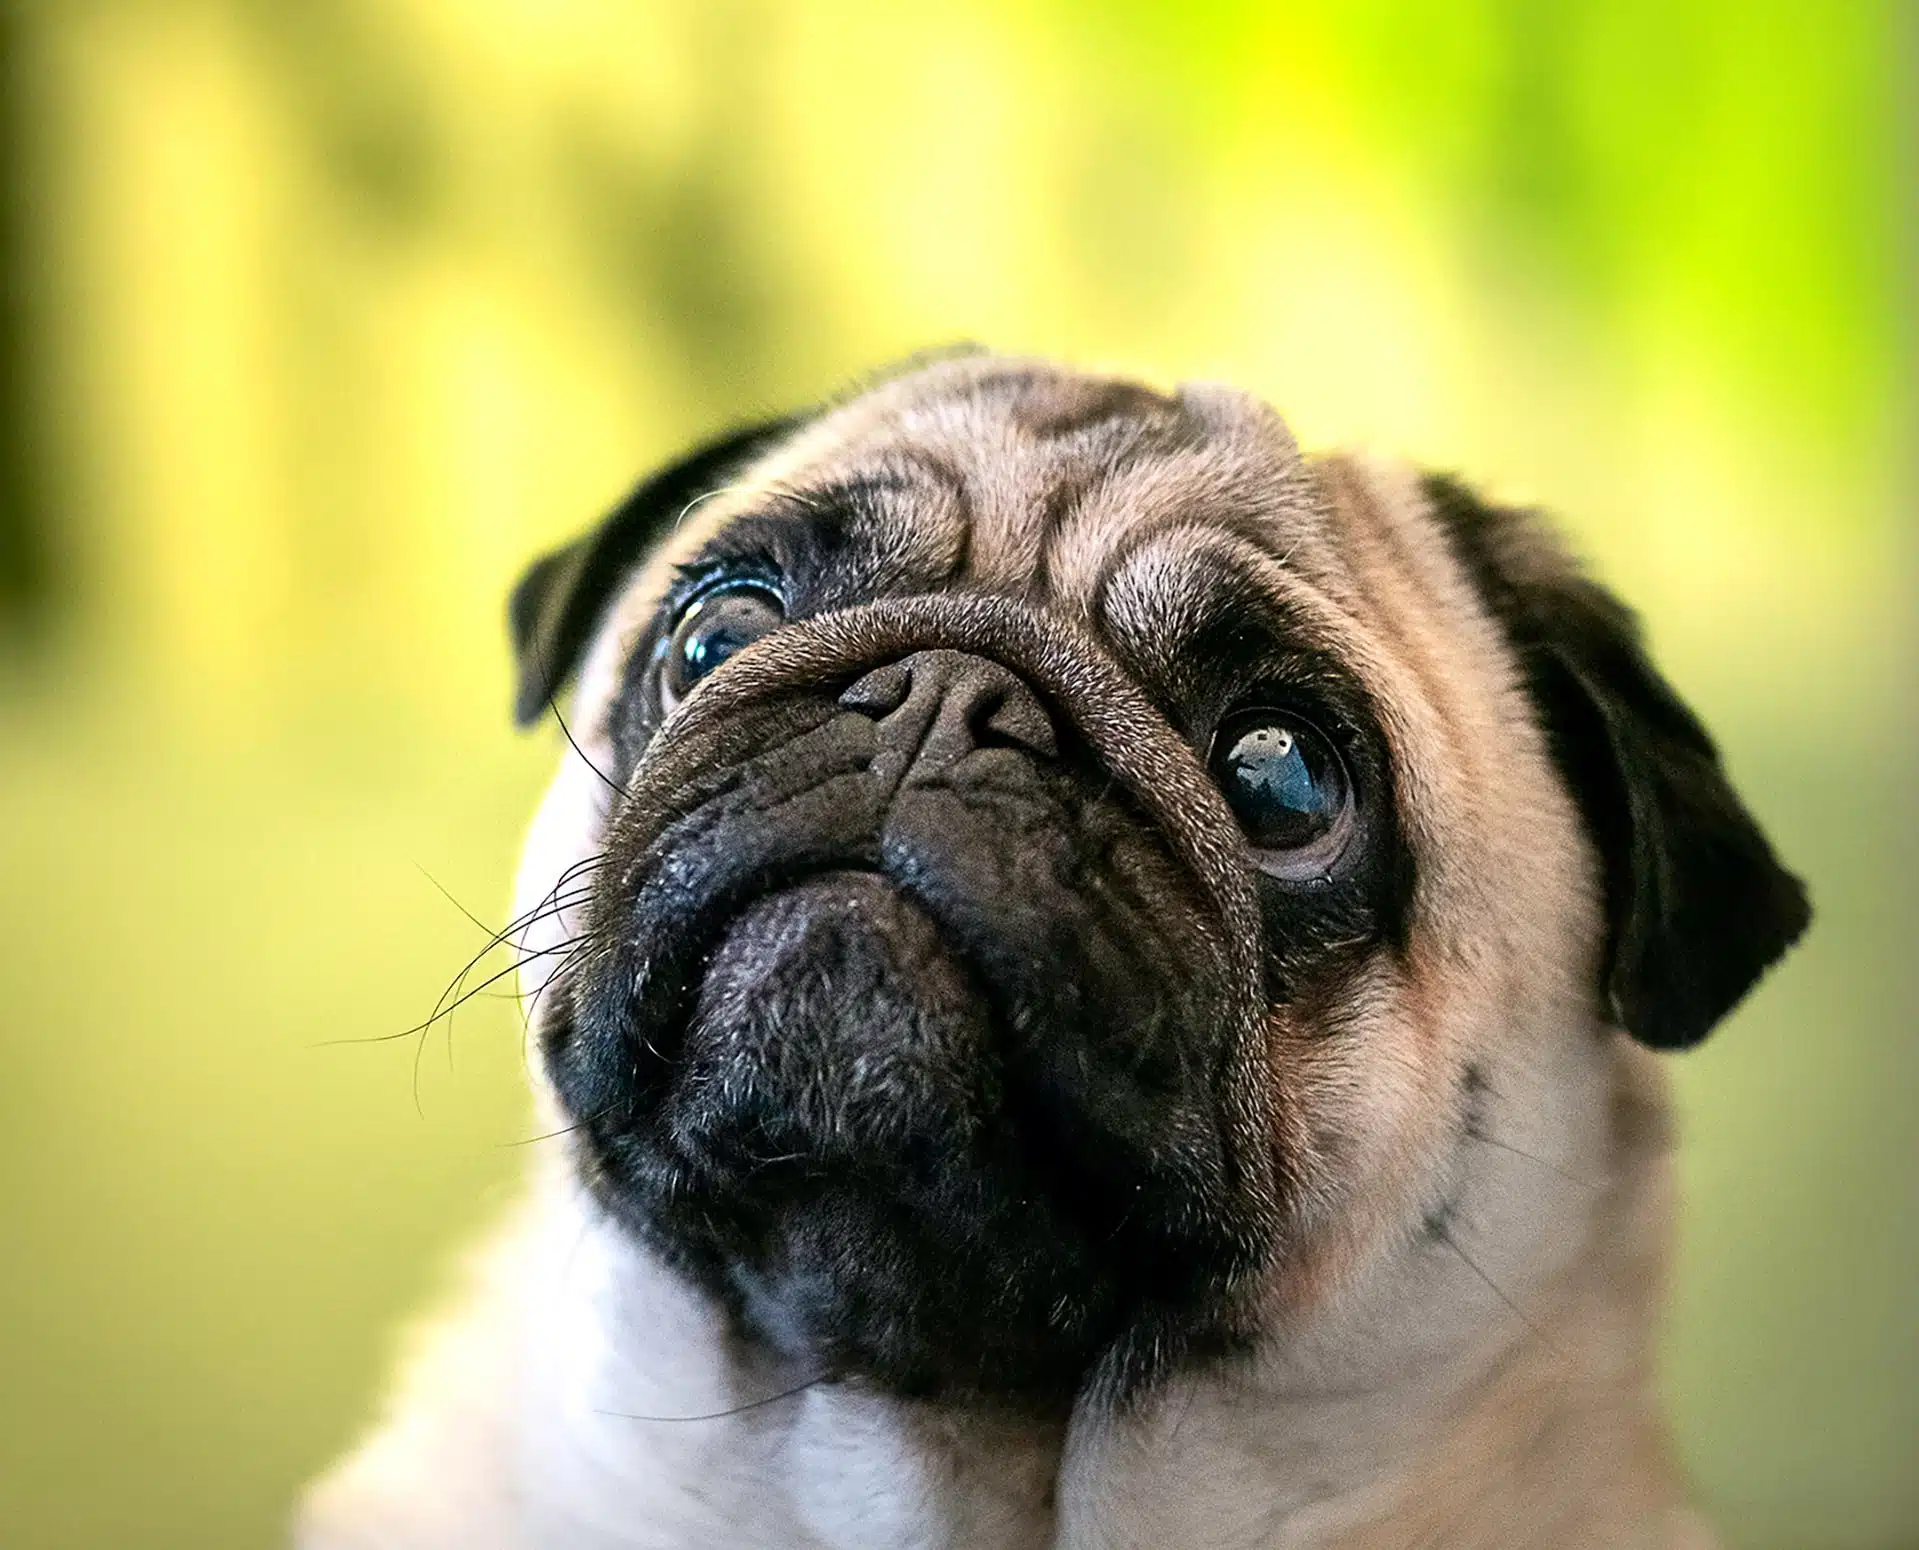 A brachycephalic pug dog looking up at the camera.